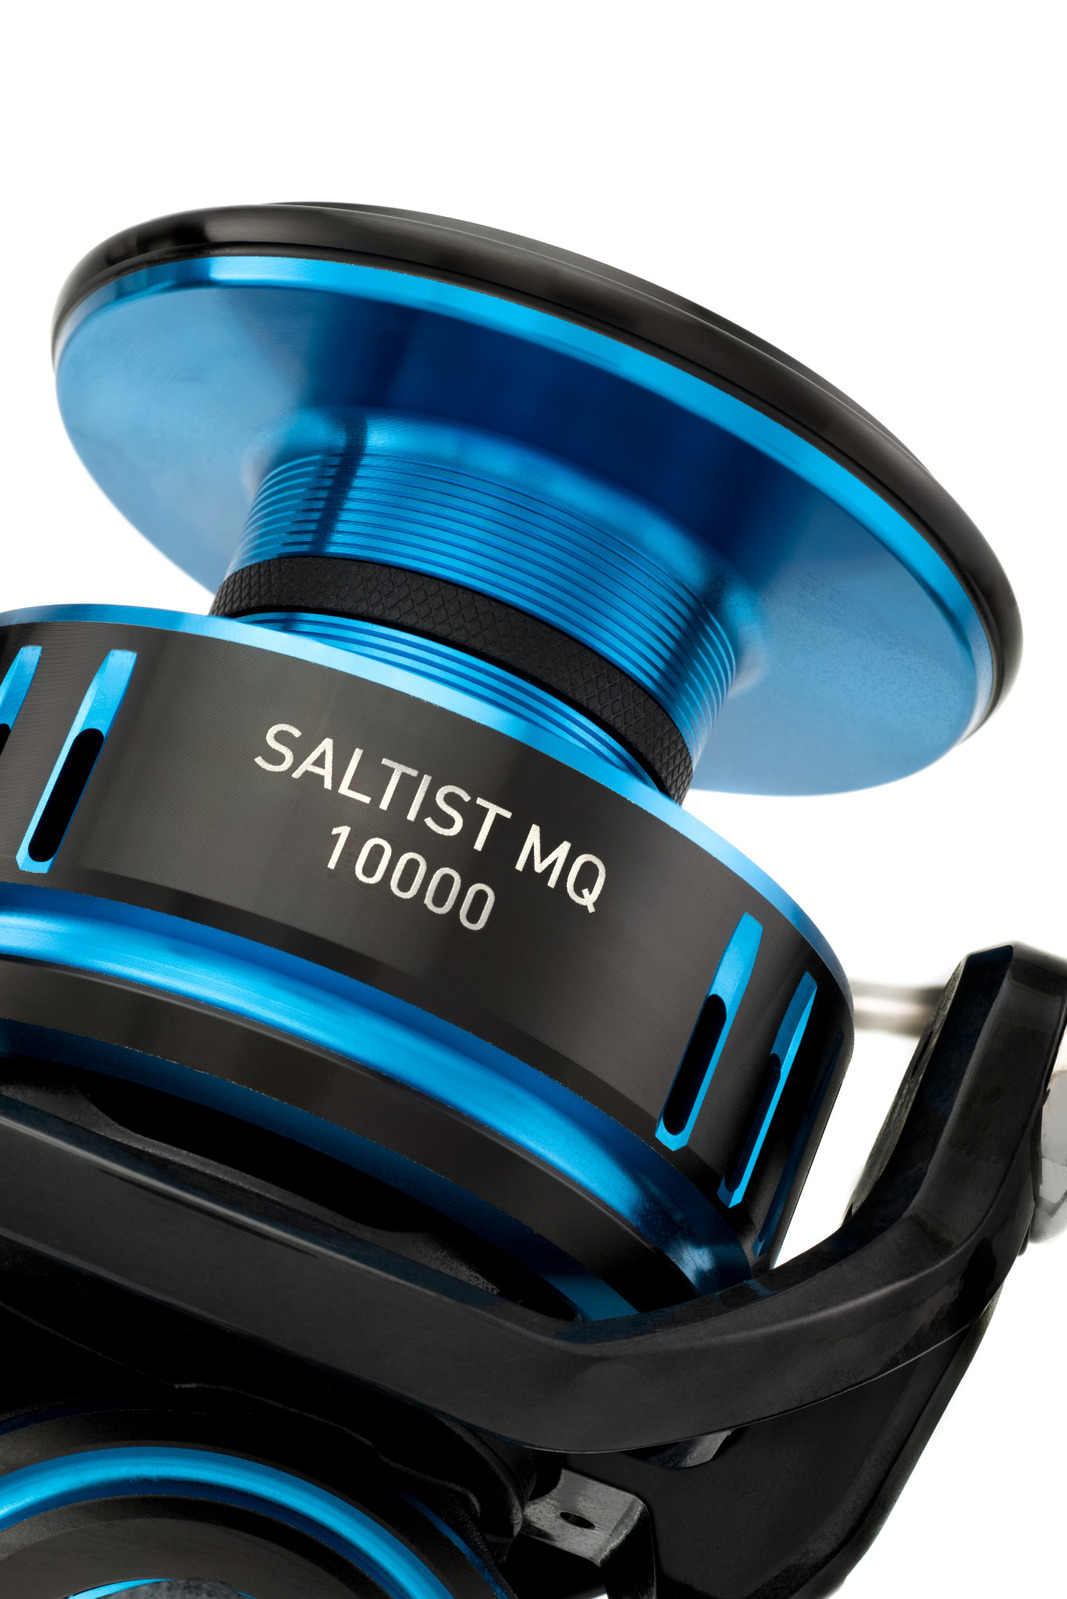 21 SALTIST MQ 4000D-XH Spinning Fishing Reel